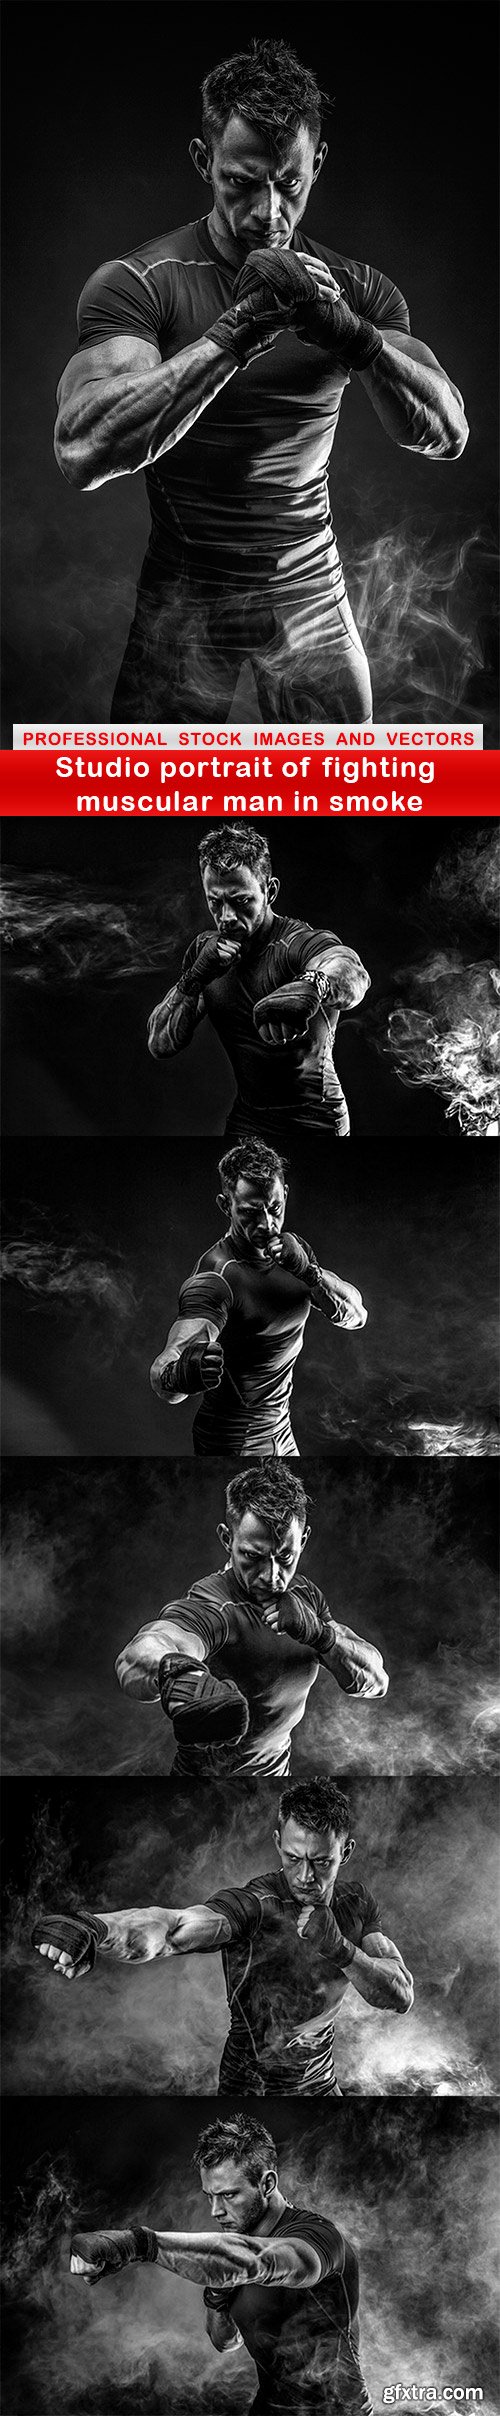 Studio portrait of fighting muscular man in smoke - 6 UHQ JPEG